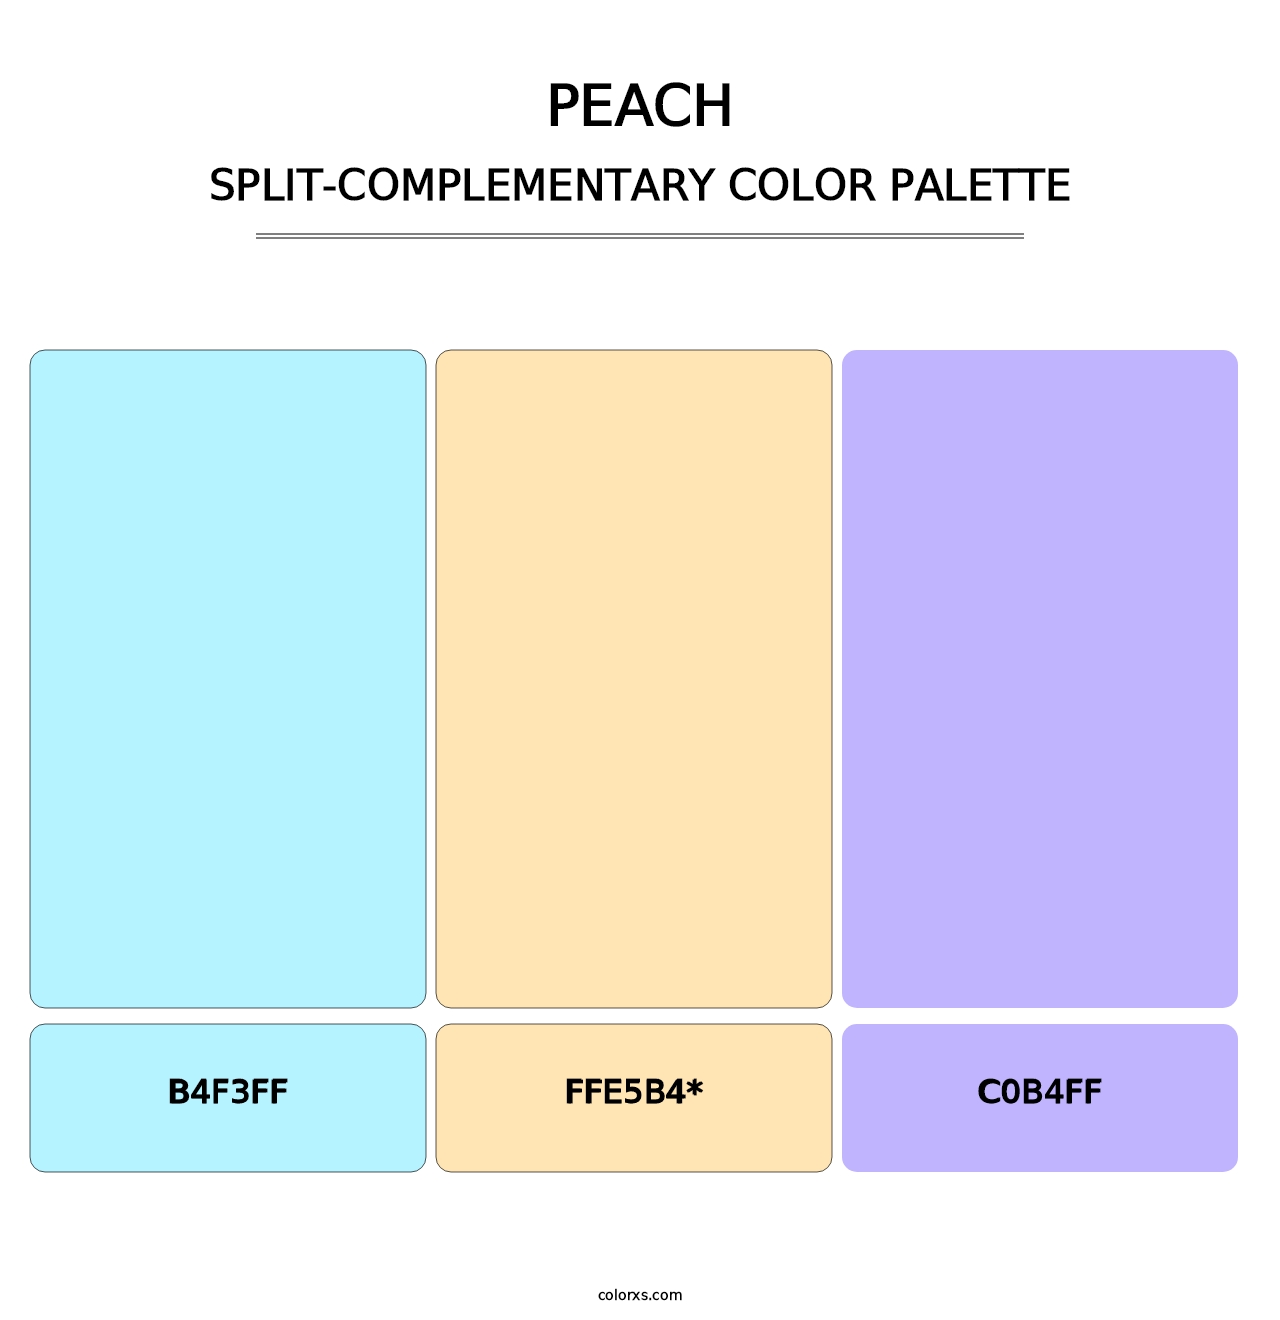 Peach - Split-Complementary Color Palette